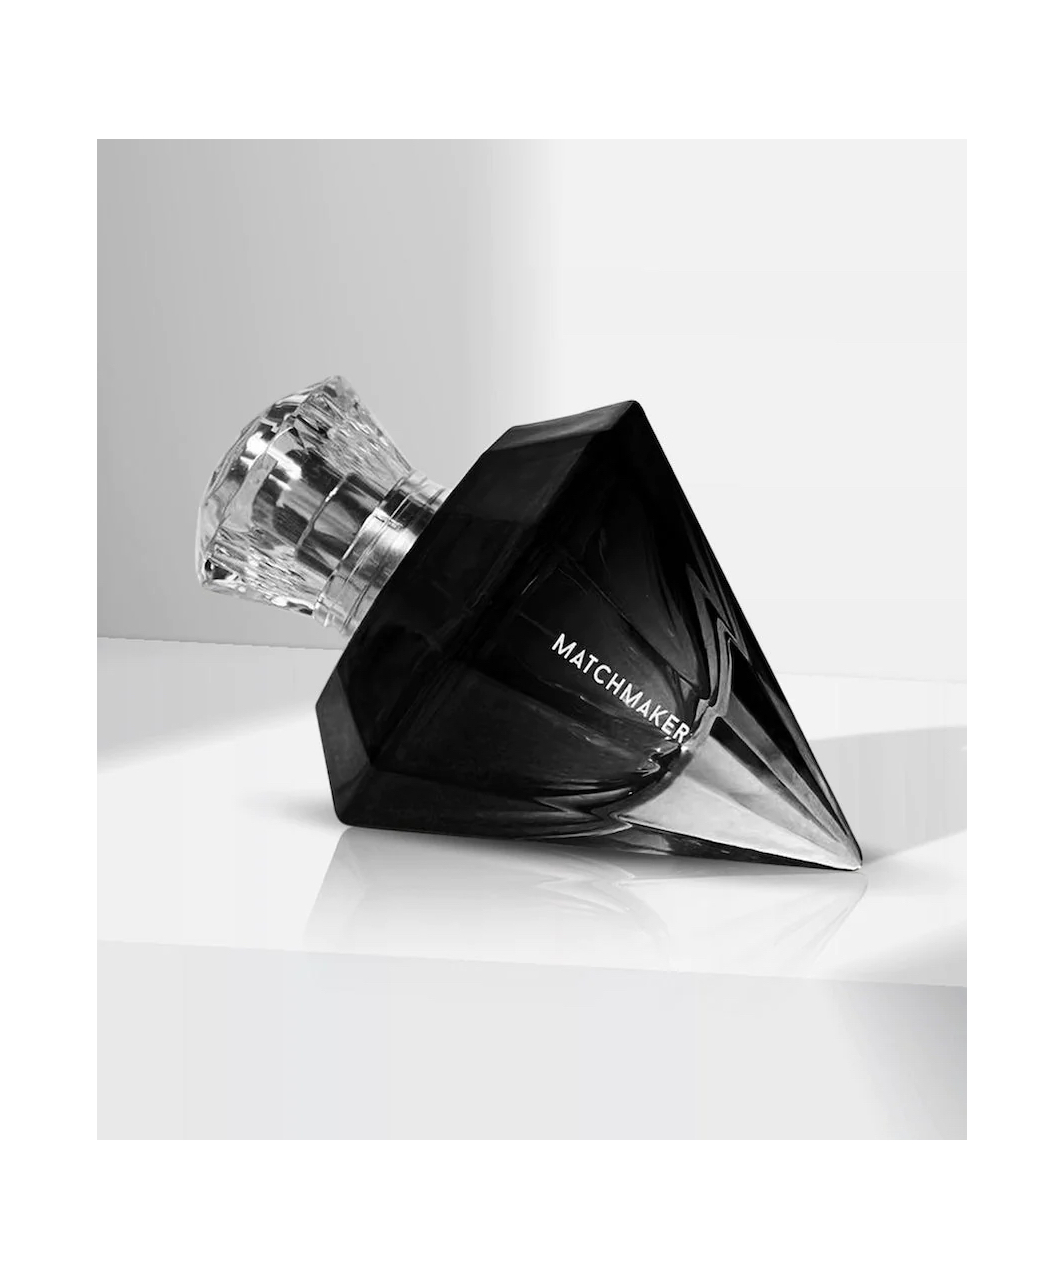 Eye Of Love x Matchmaker Black Diamond Pheromone Parfum To Attract Him (10 / 30 ml)